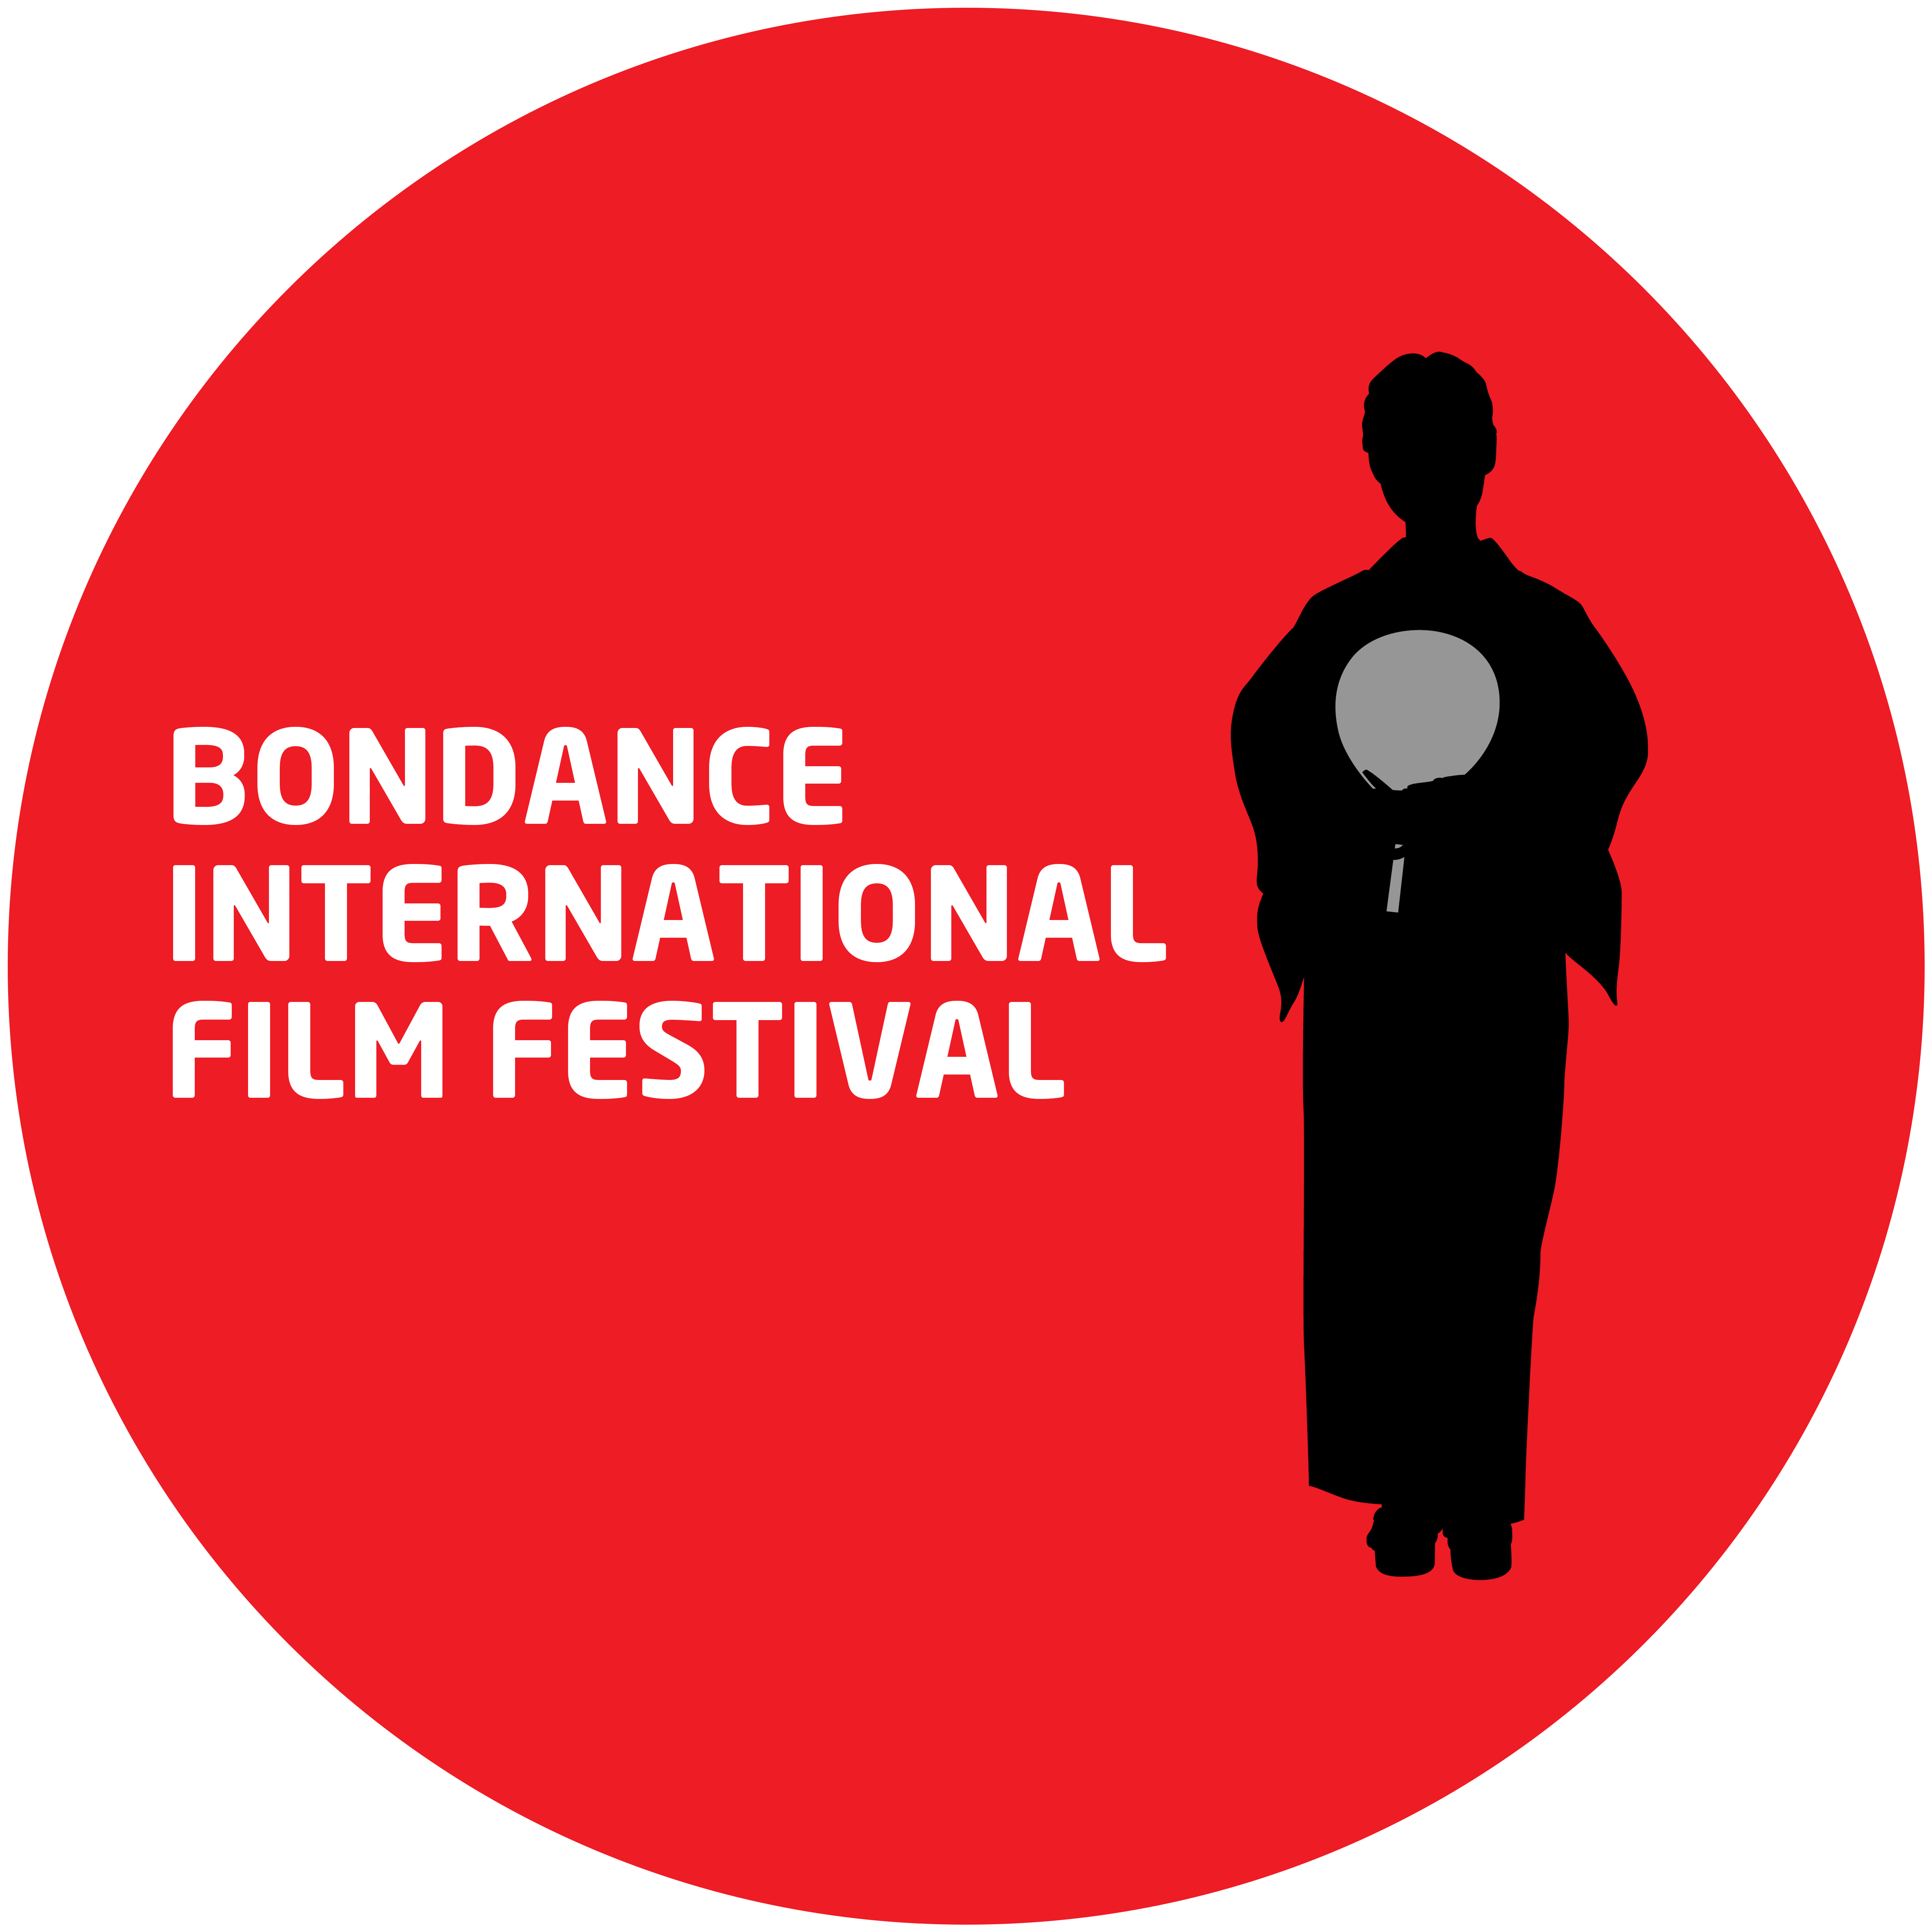 BonDance International Film Festival - International Film Festival in Saga